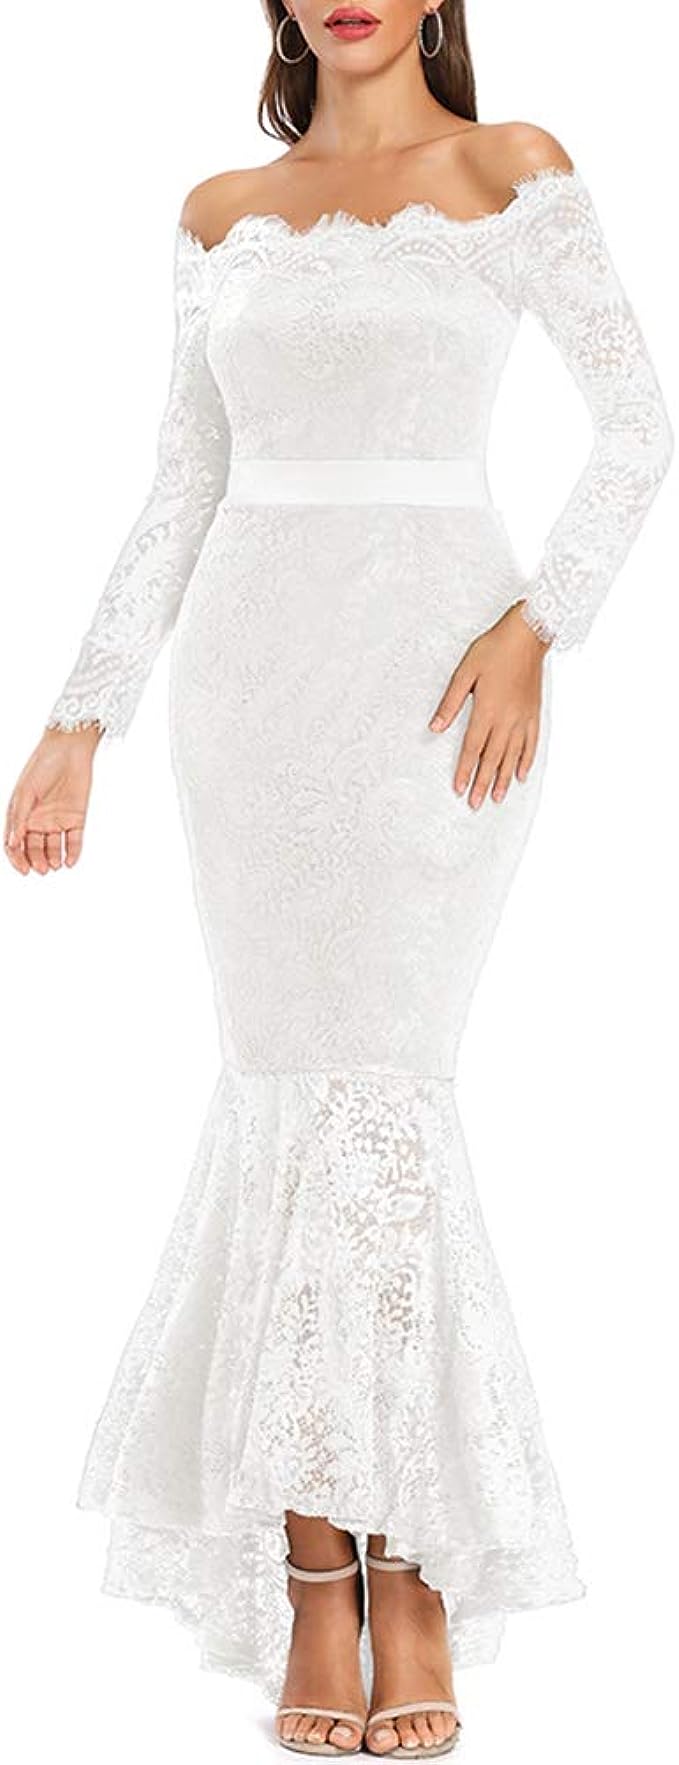 LALAGEN Women's Floral Lace Long Sleeve Off Shoulder Wedding Mermaid Dress (White, X-Large)